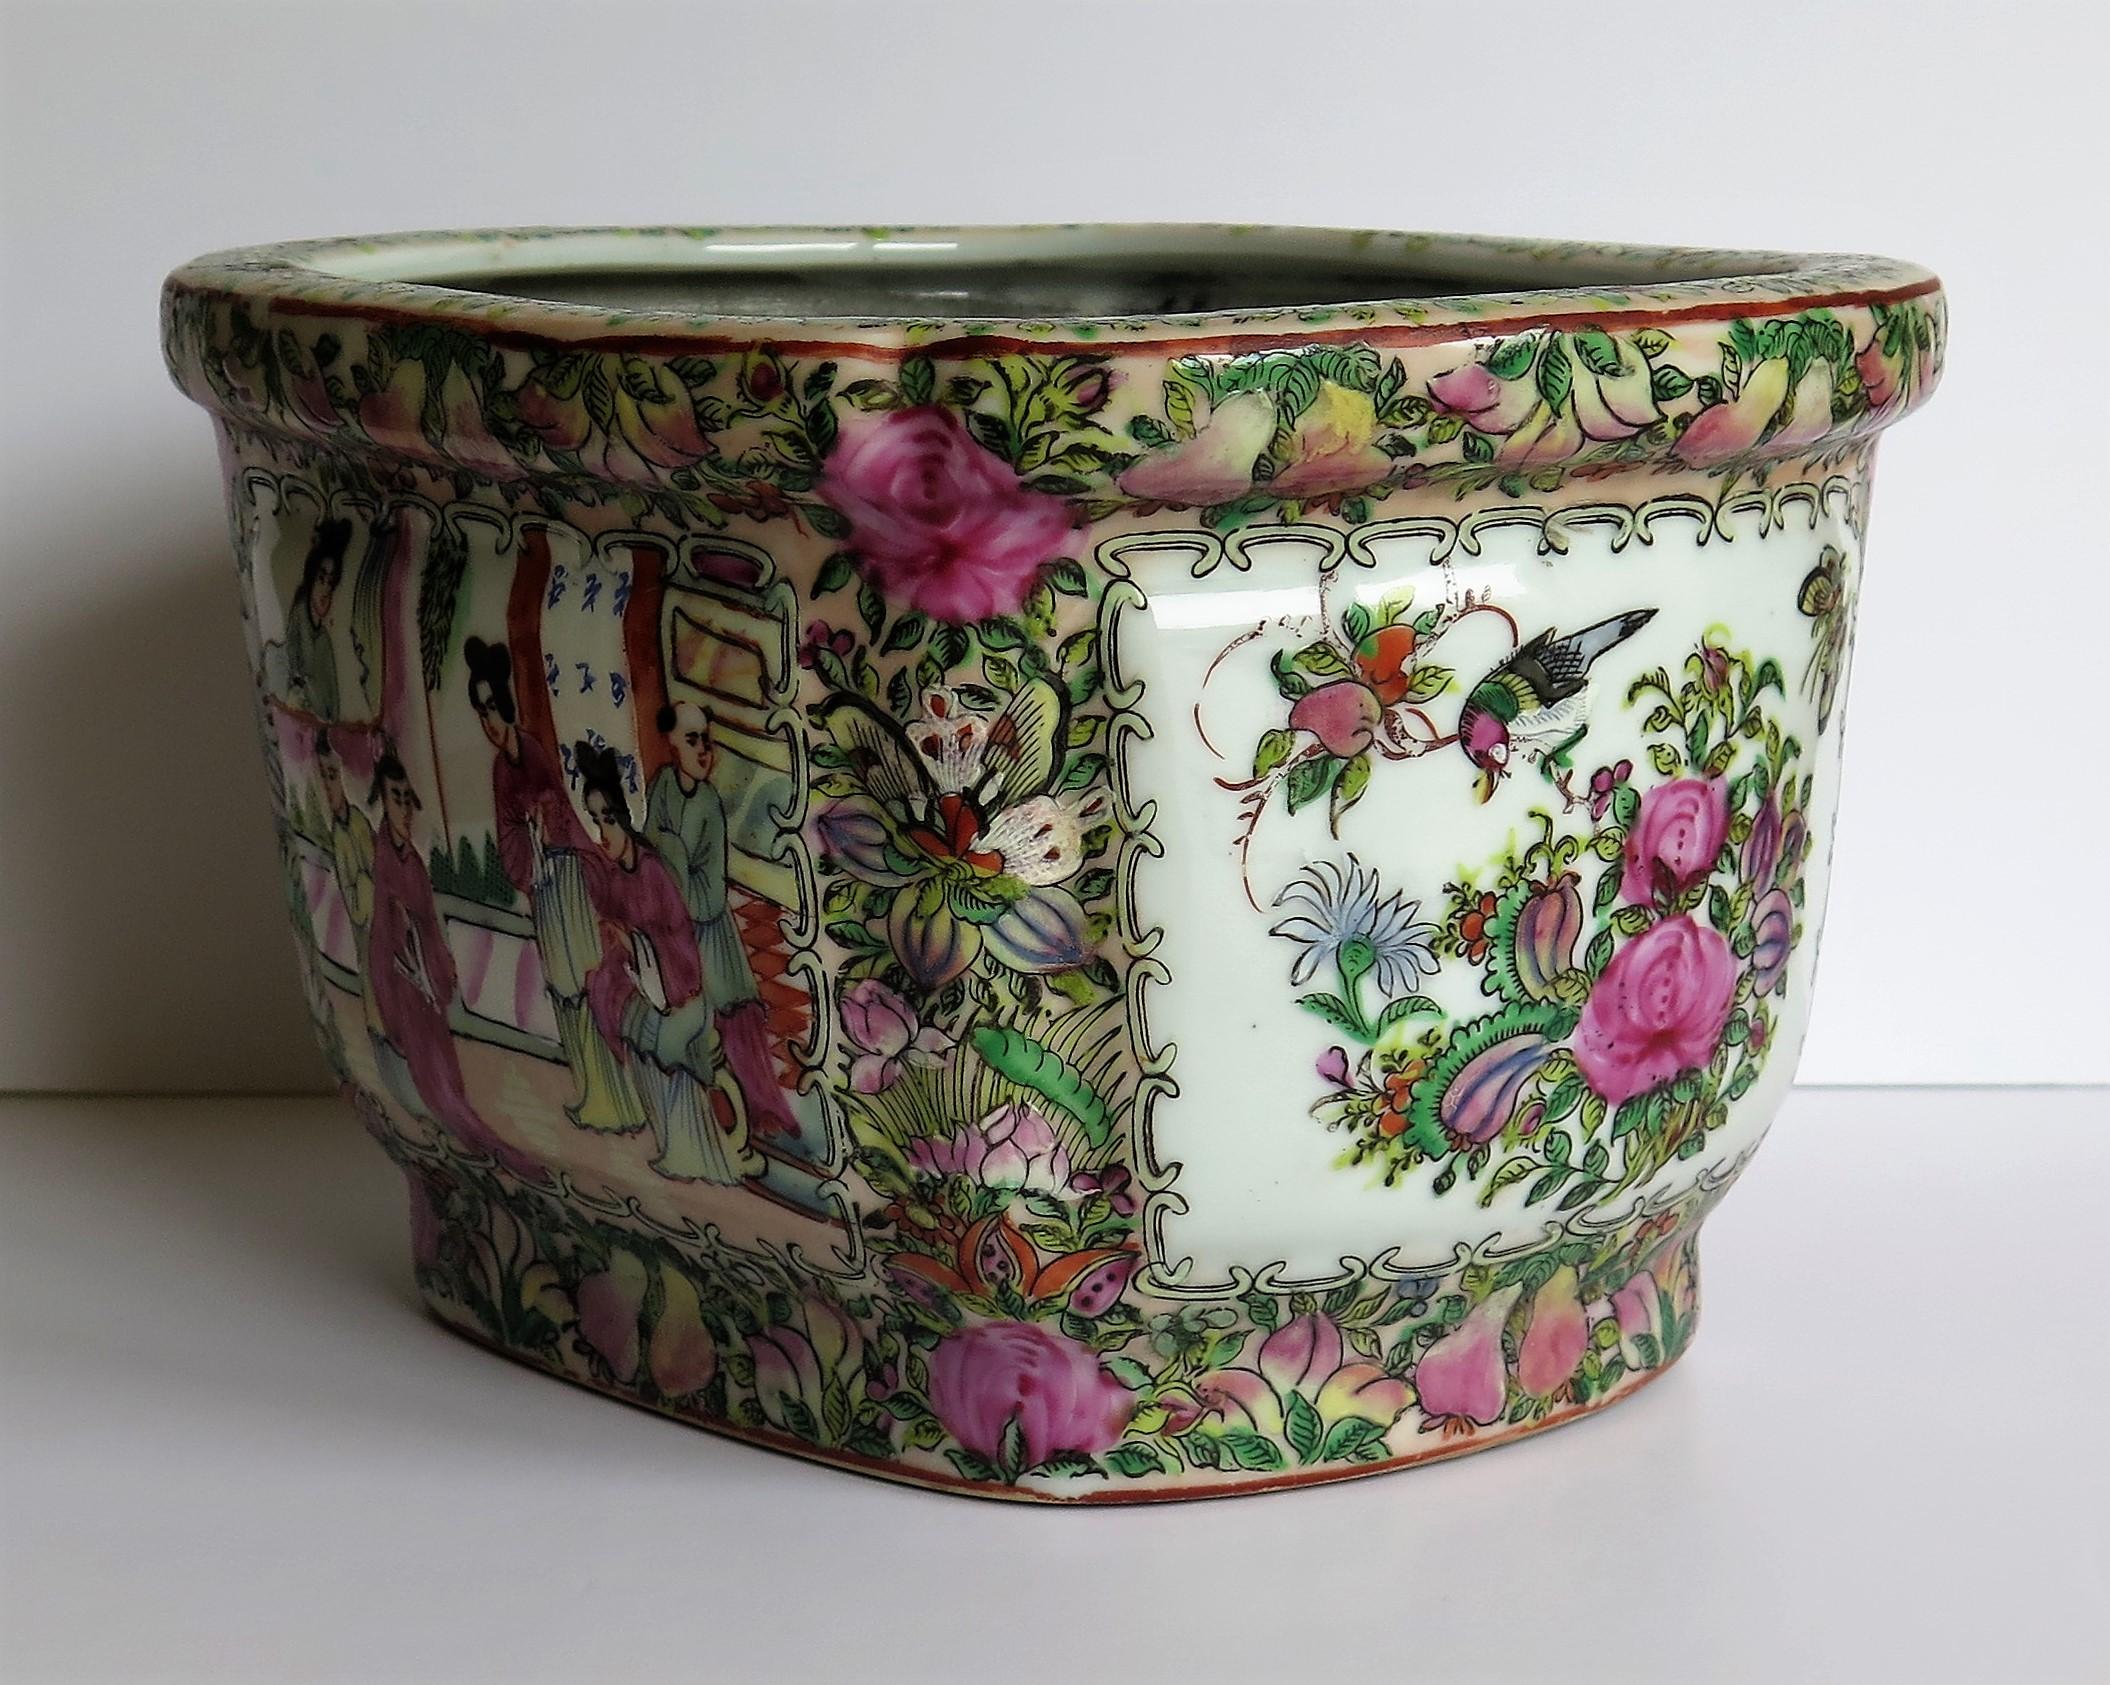 19th Century Chinese Export Ceramic Jardinière or Planter Rose Medallion, Circa 1900